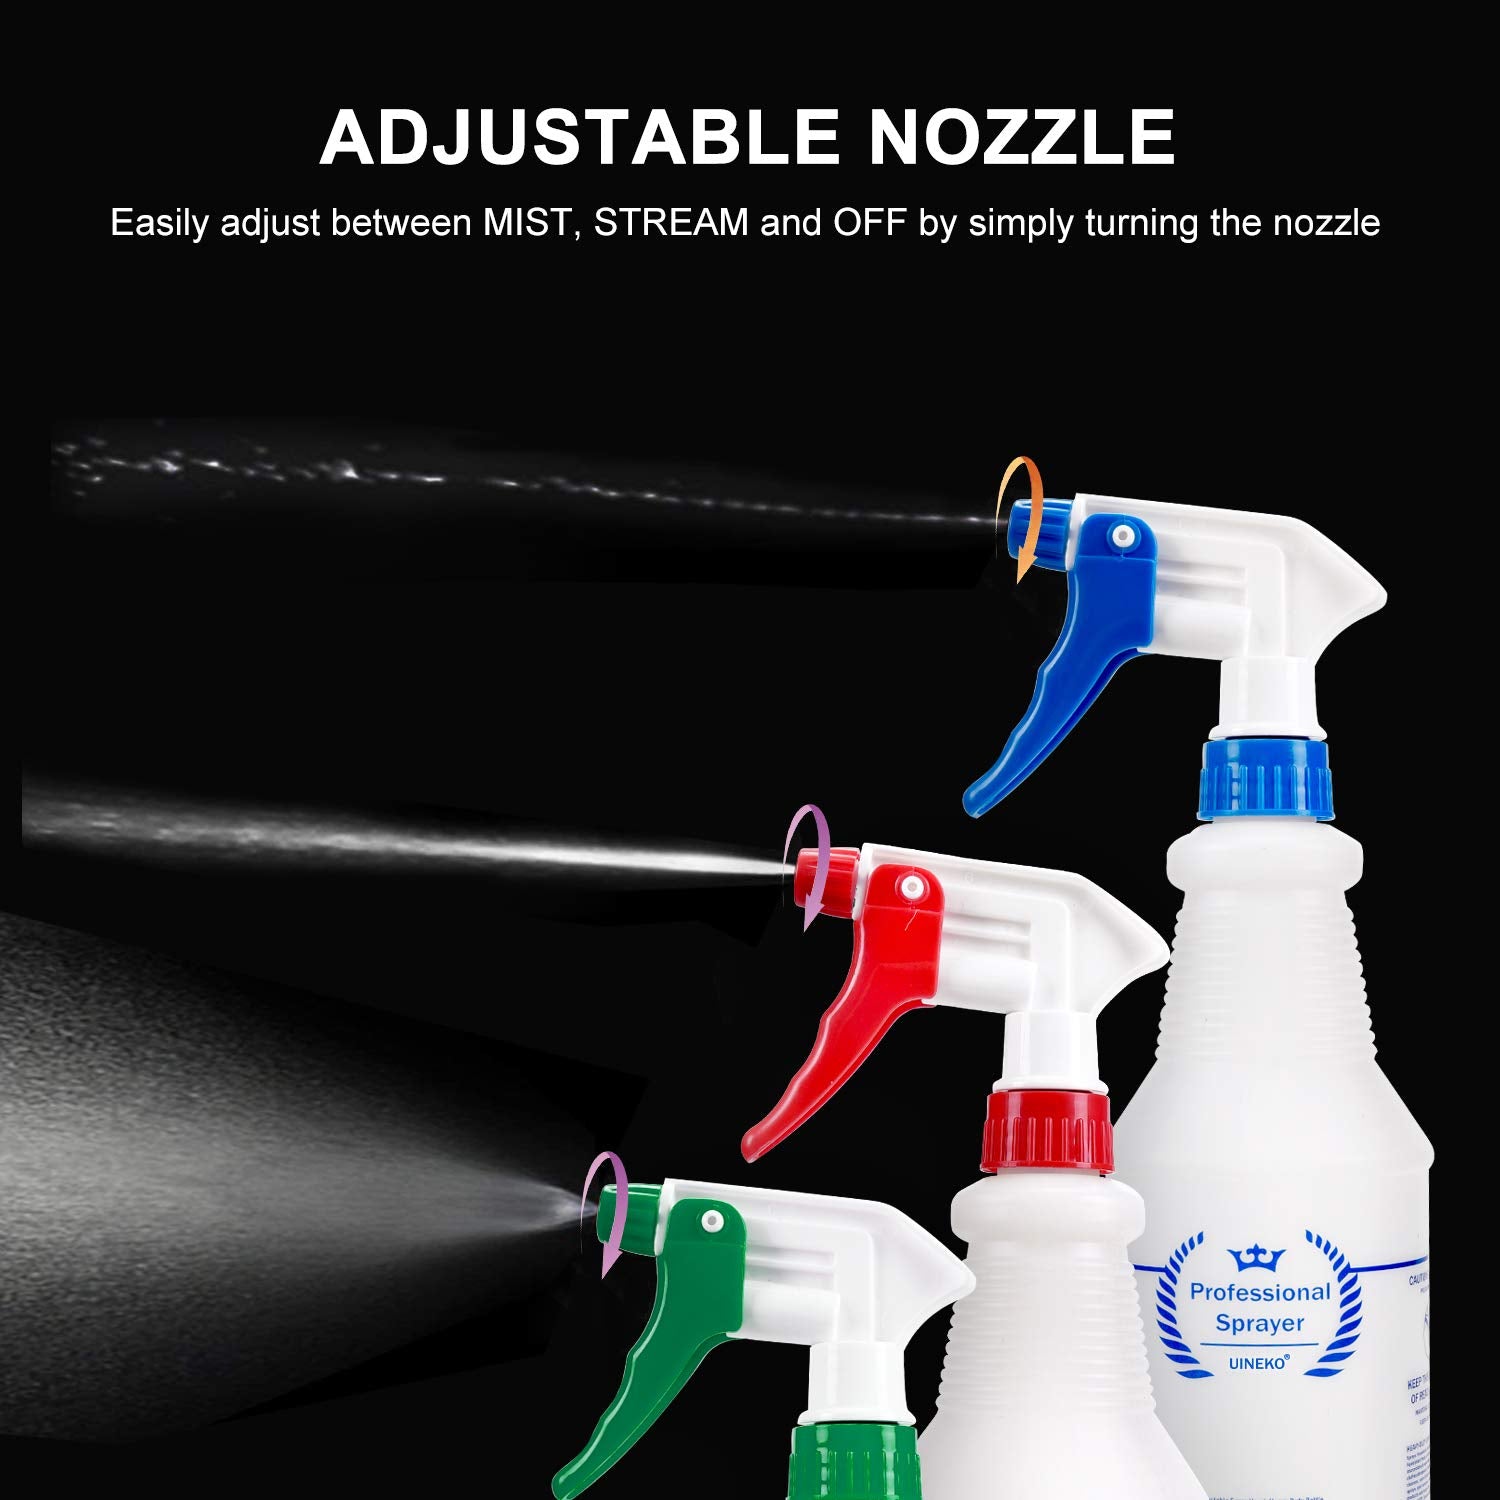 Uineko Plastic Spray Bottle (3 Pack, 24 Oz, 3 Colors) Heavy Duty All-P